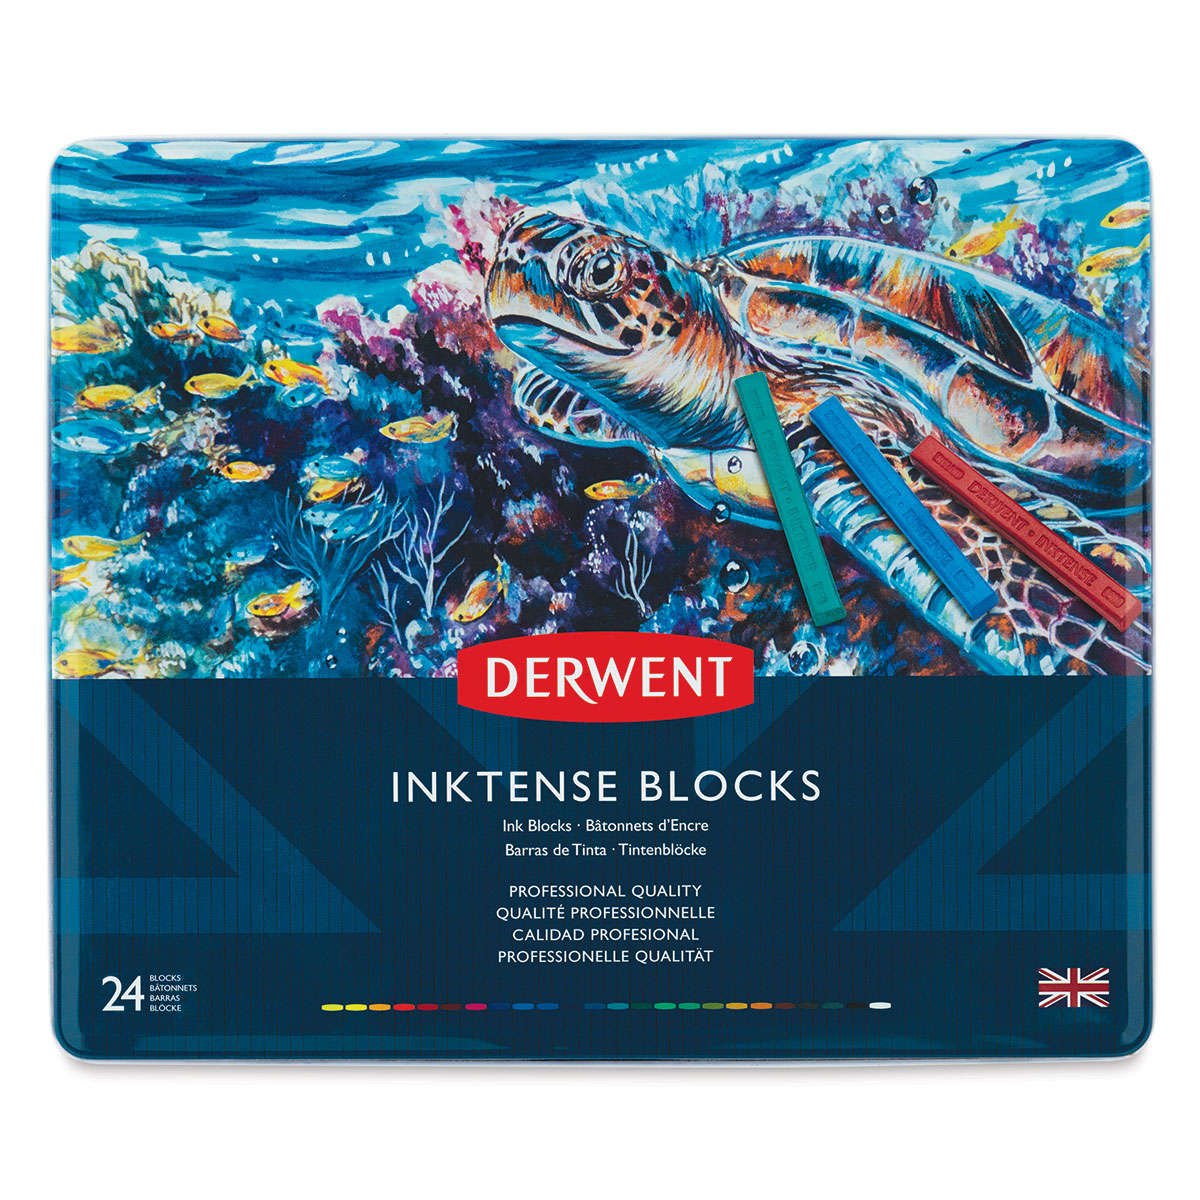 Uk Original Derwent Inktense Blocks 2300442, 8mm Square Block